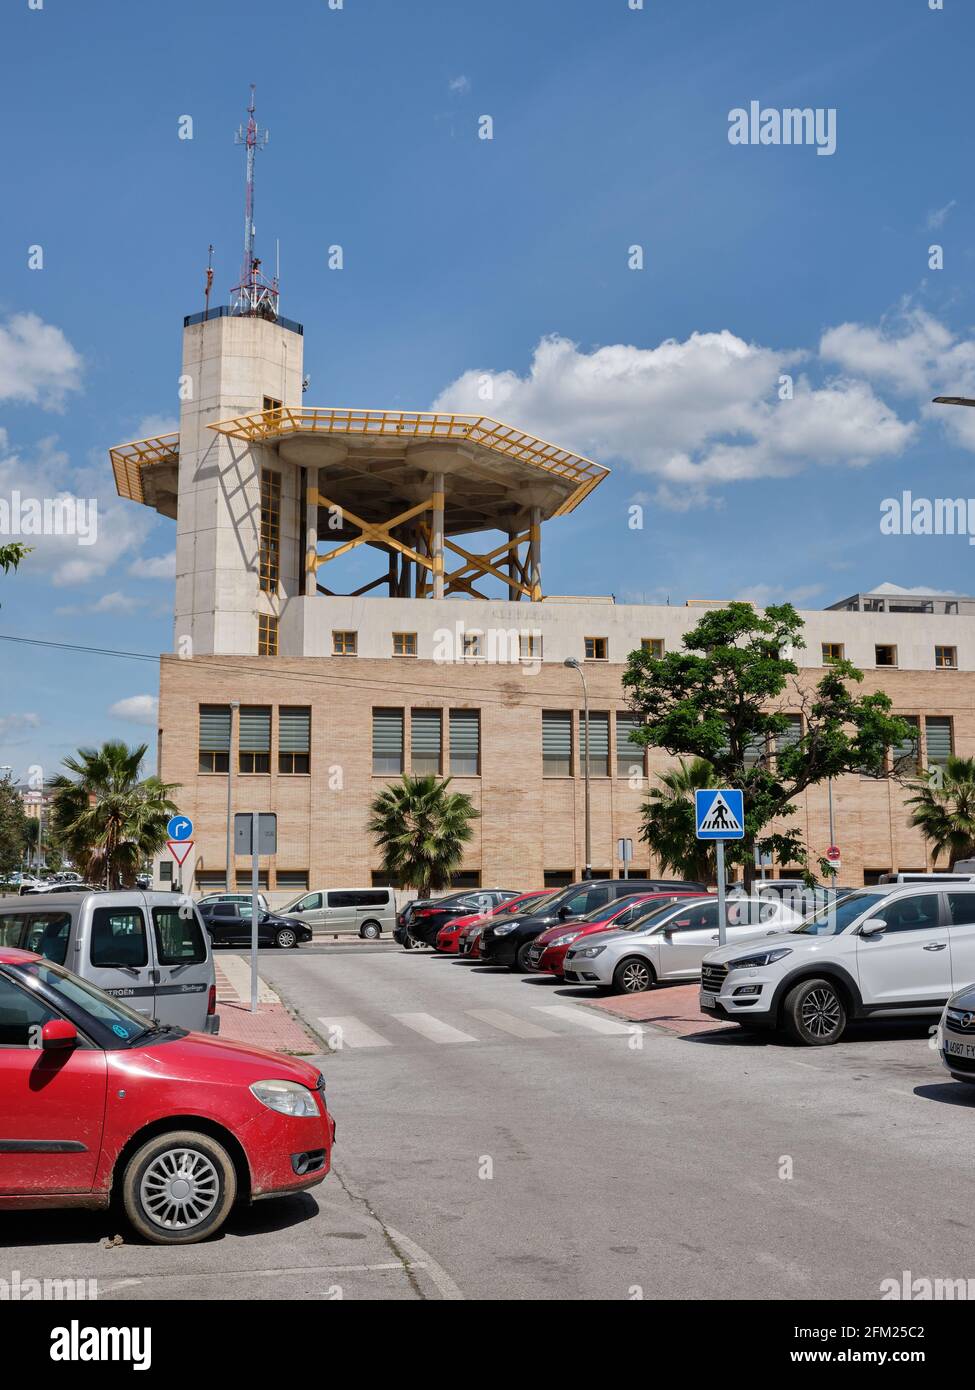 Policia Nacional, police station in Malaga, Andalusia, Spain. Stock Photo